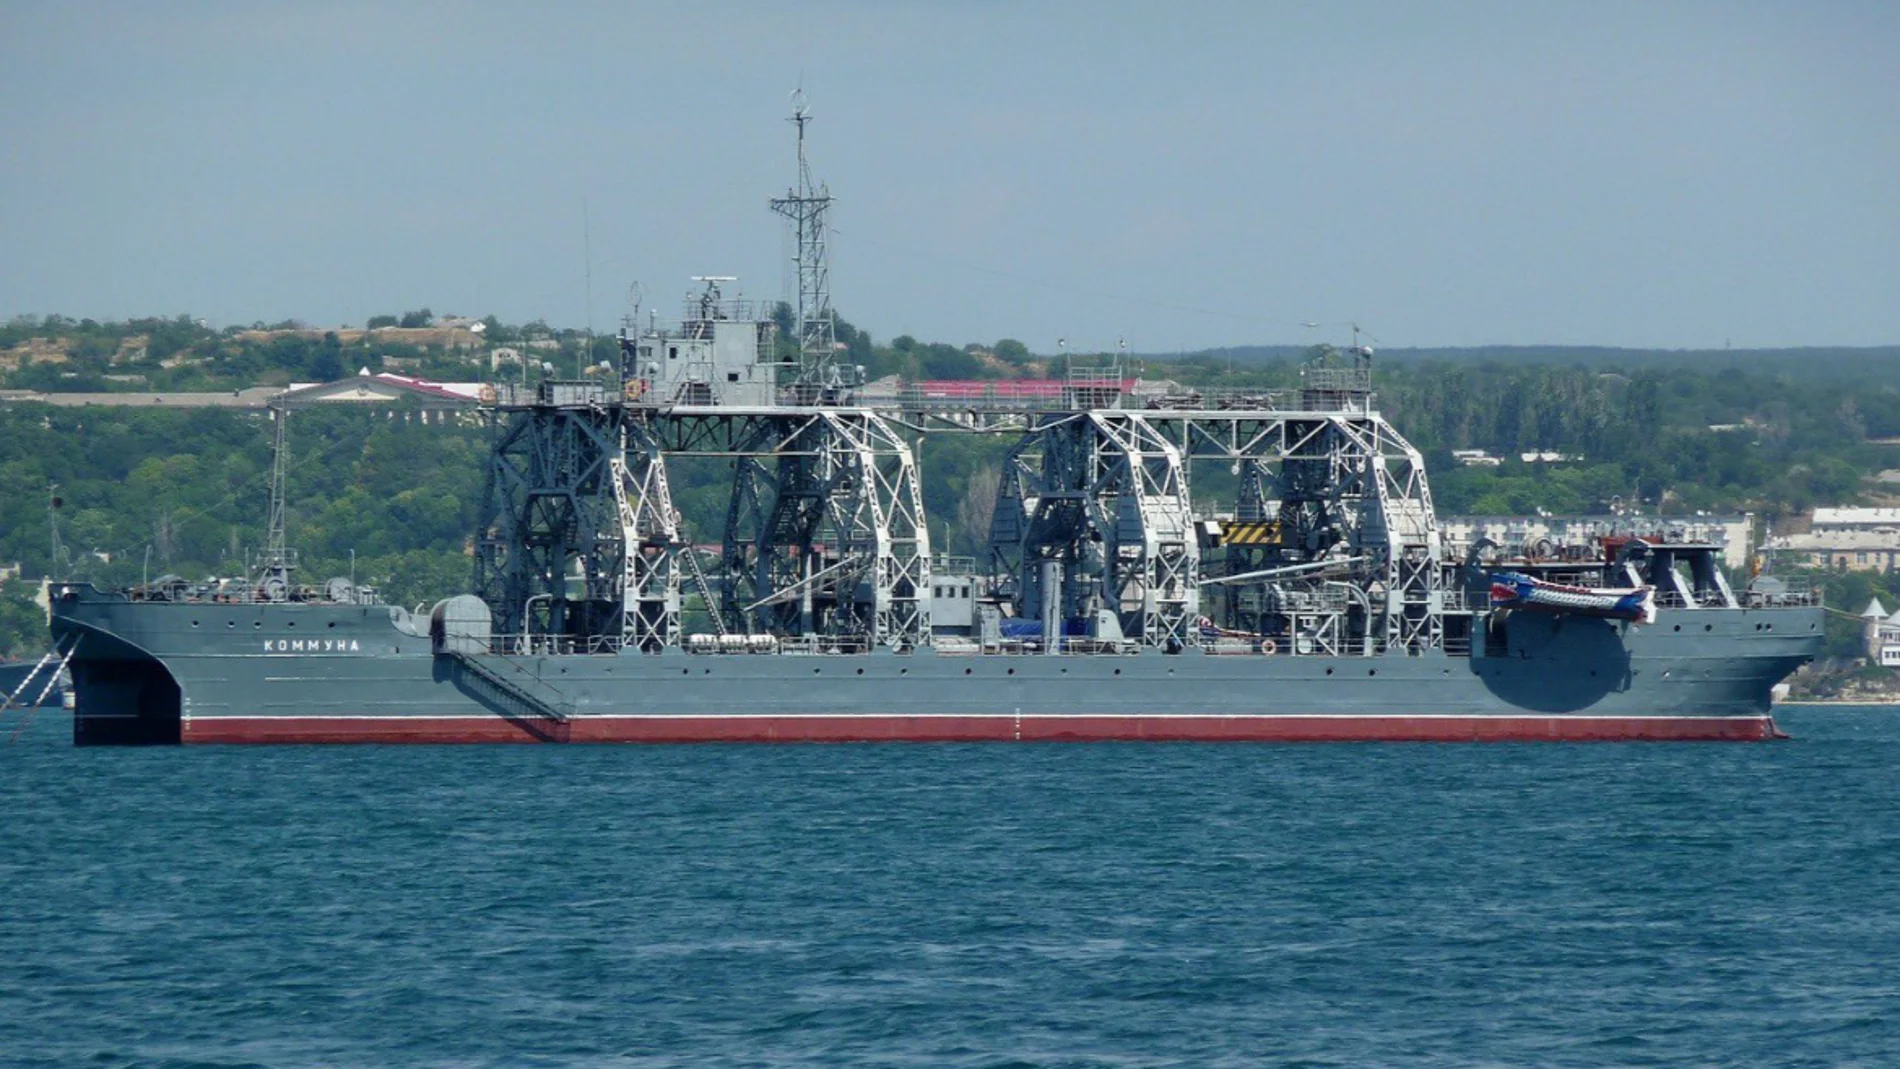 El buque de salvamento ruso "Kommuna" de la Flota del Mar Negro